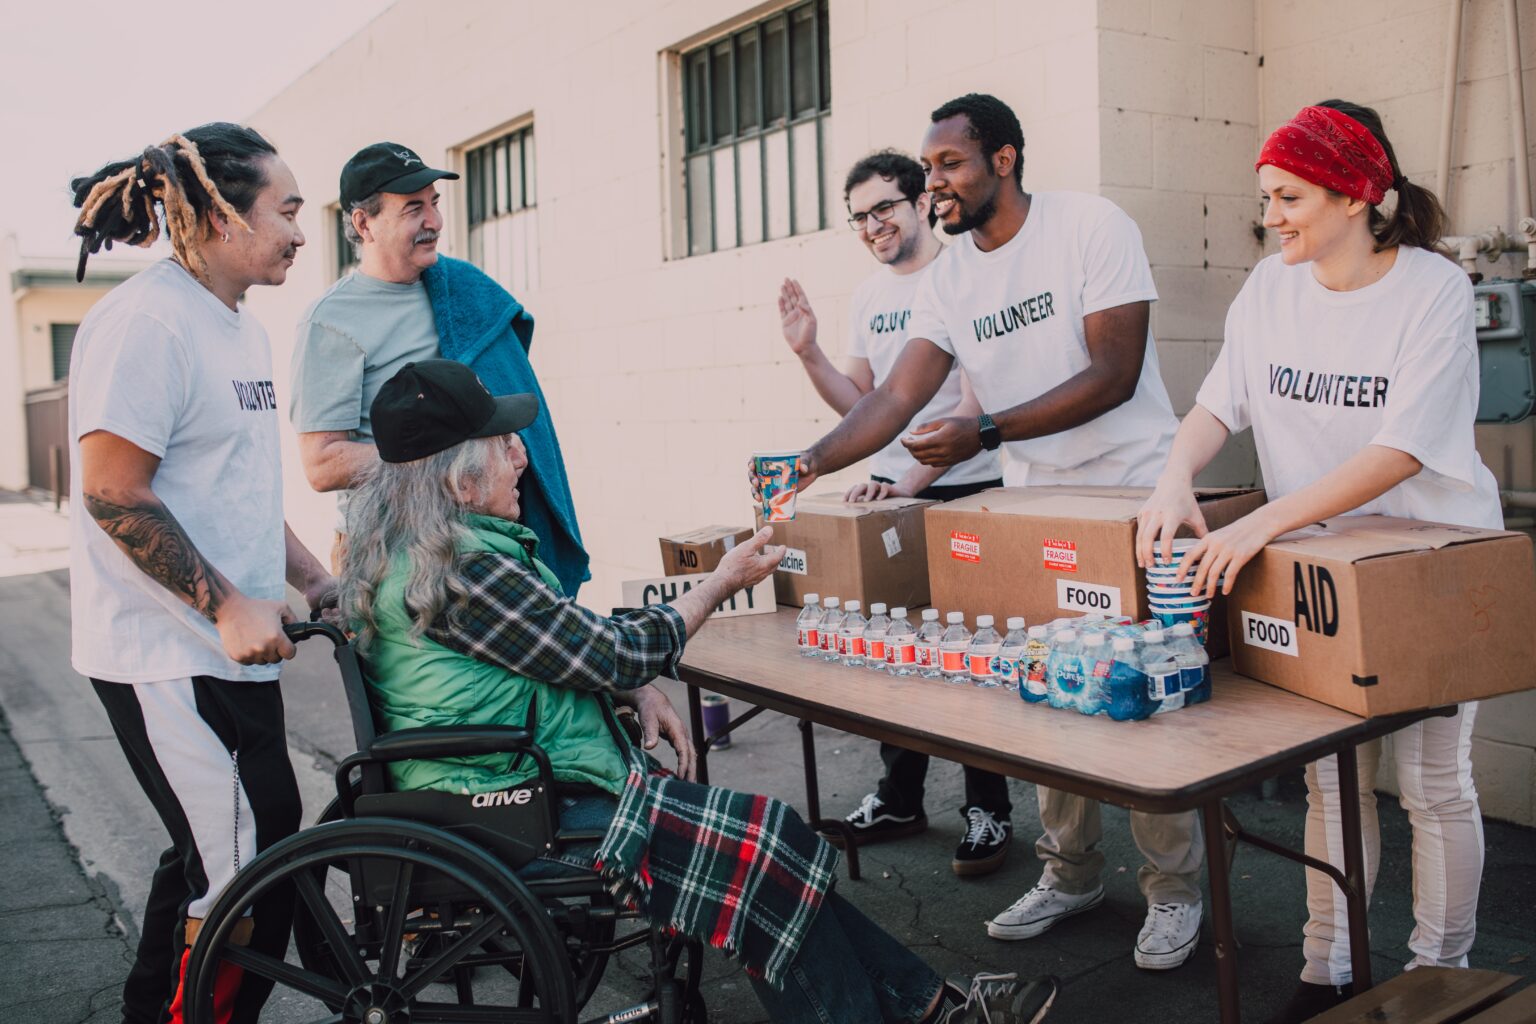 As part of a community program, volunteers distribute food and water to two elderly veterans.